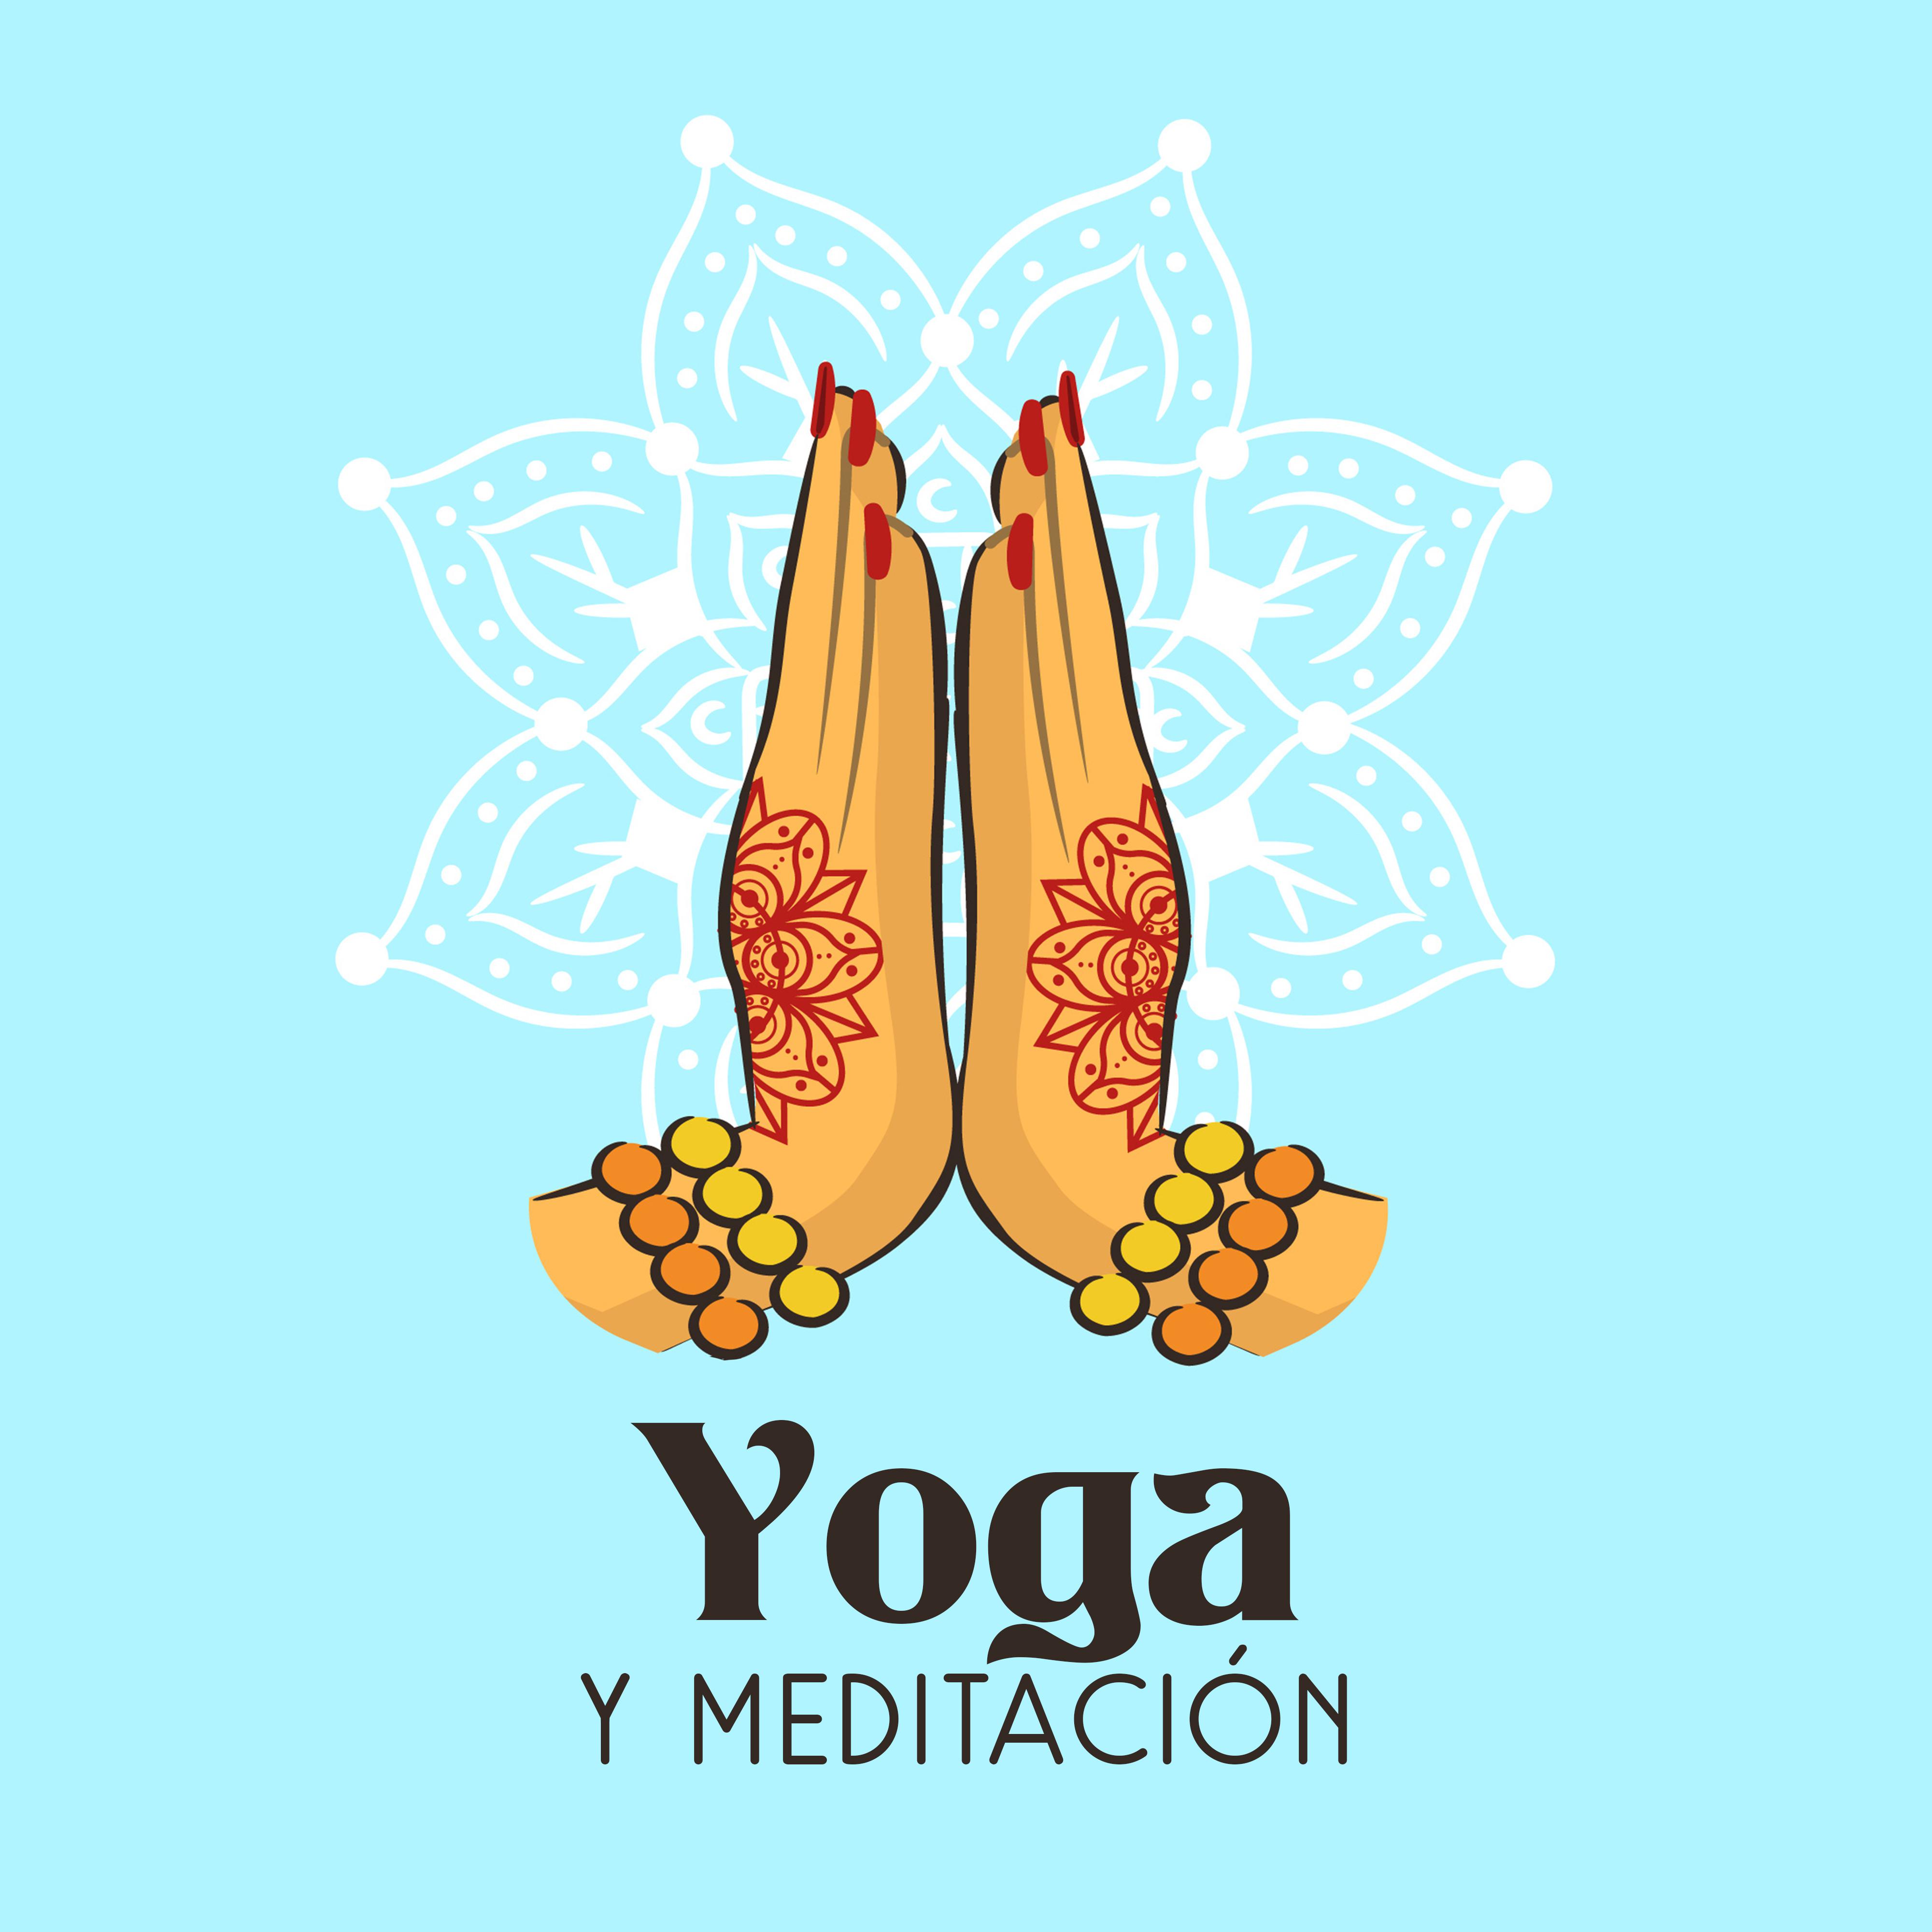 Yoga y Meditacio n